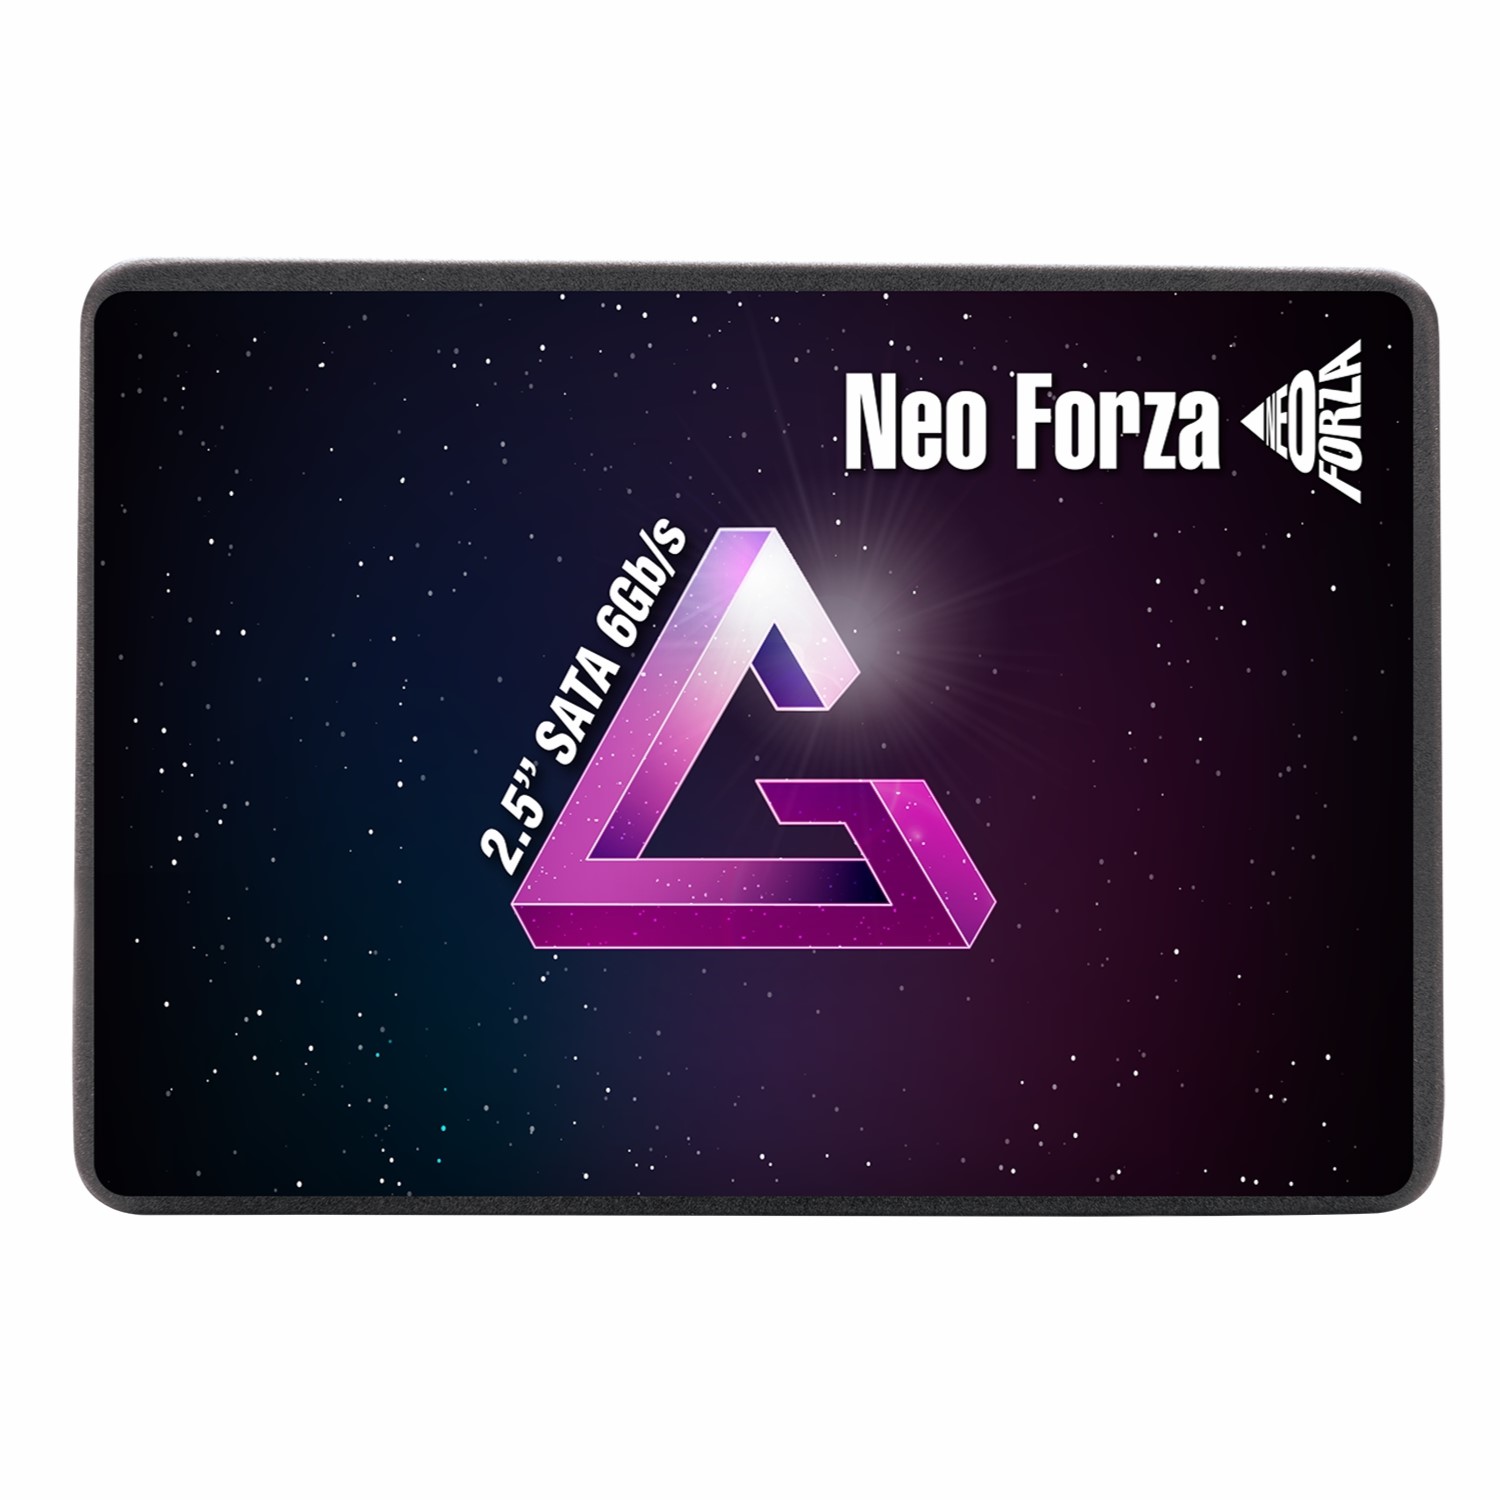 حافظه اس اس دی Neo Forza NFS12 960GB